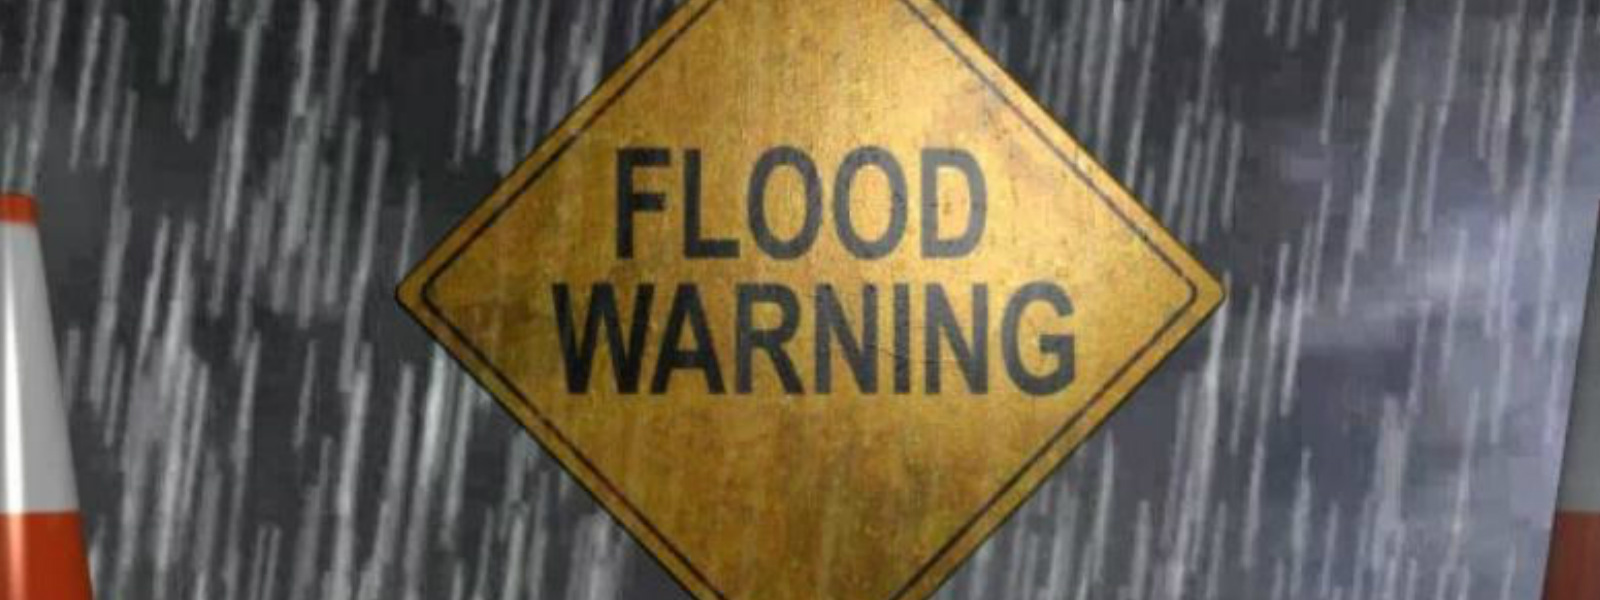 DMC reports threats of minor flooding